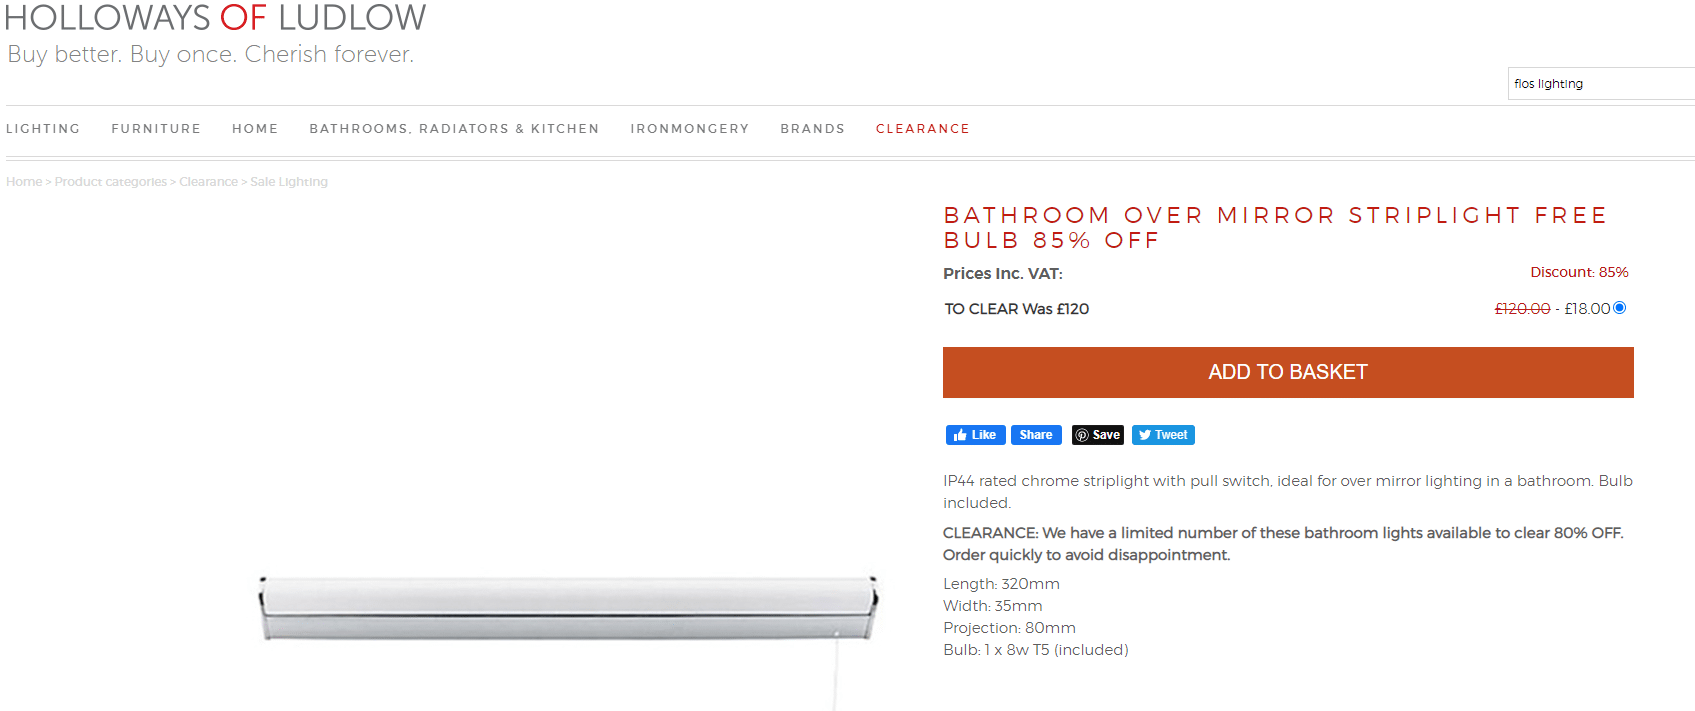 hollowaysofludlow.com 85% off discount on light